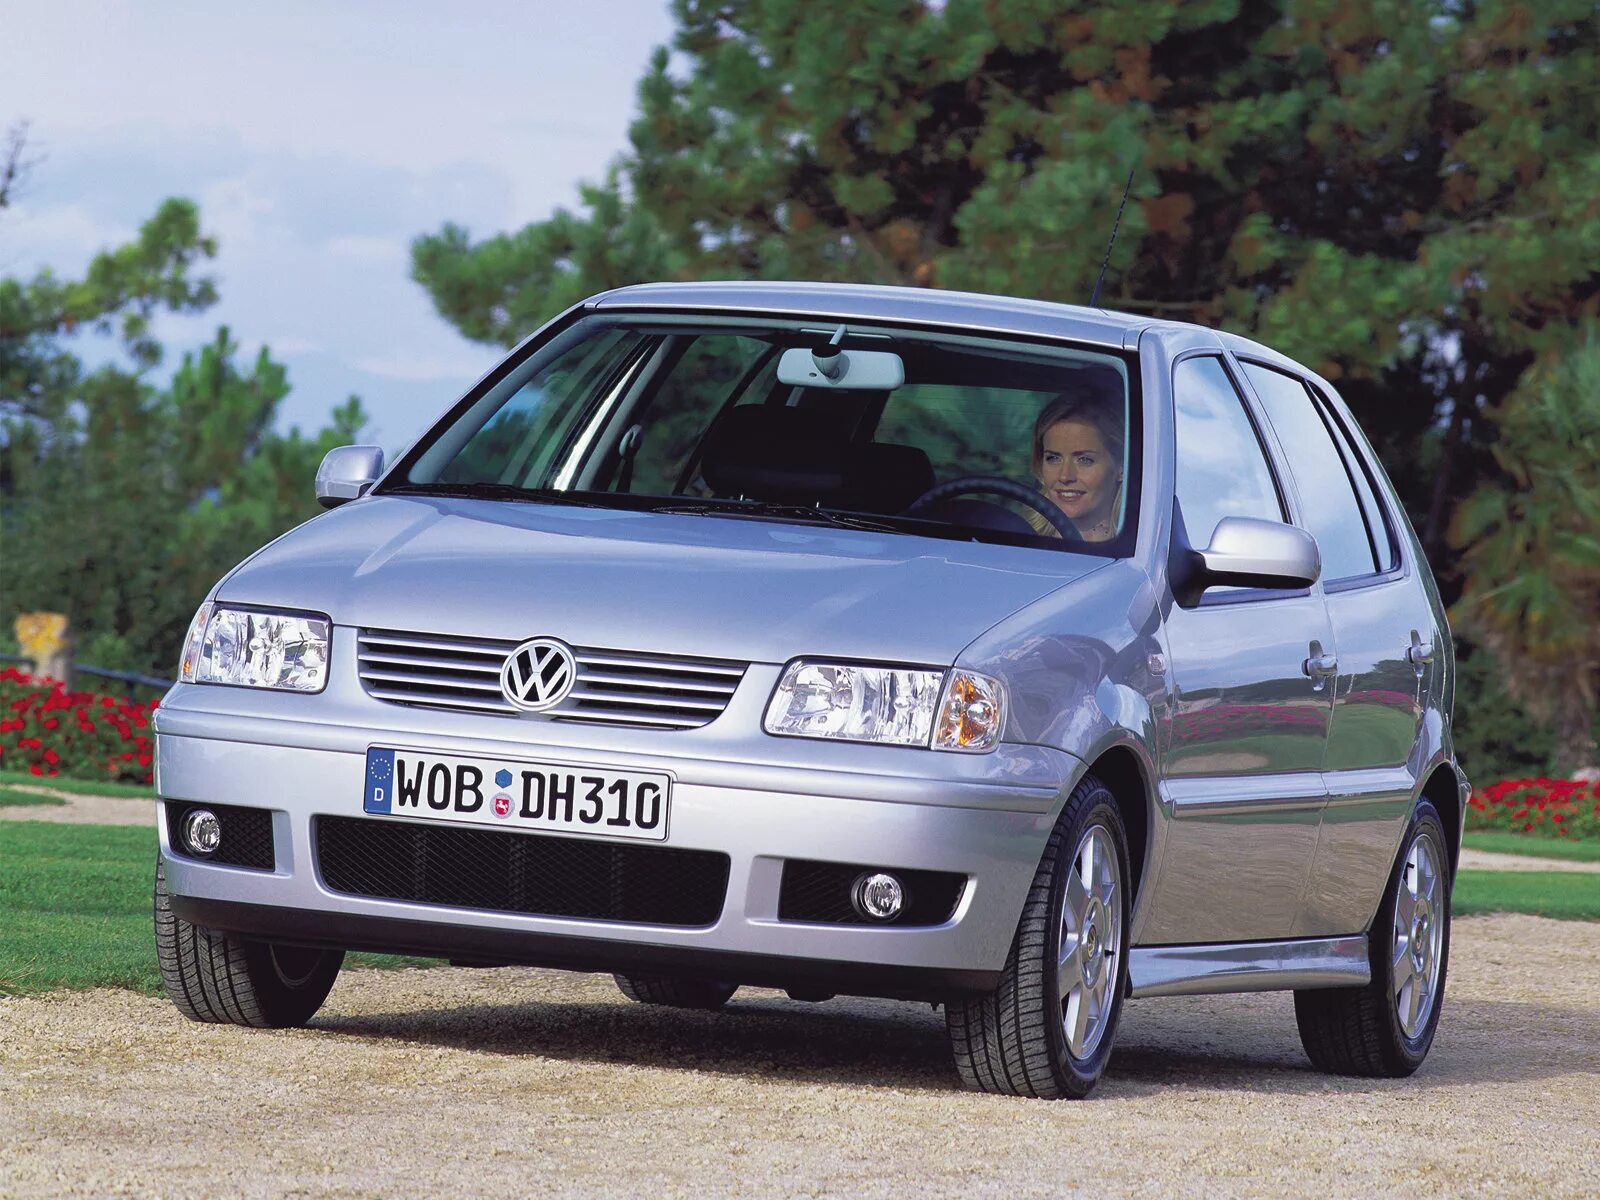 Volkswagen Polo 2001 1.4 3 поколение. Фольксваген поло 1999 1.6. Volkswagen Polo 2001 Hatchback. Фольксваген поло 1999 1.4 хэтчбек. Фольксваген поло 3 поколение